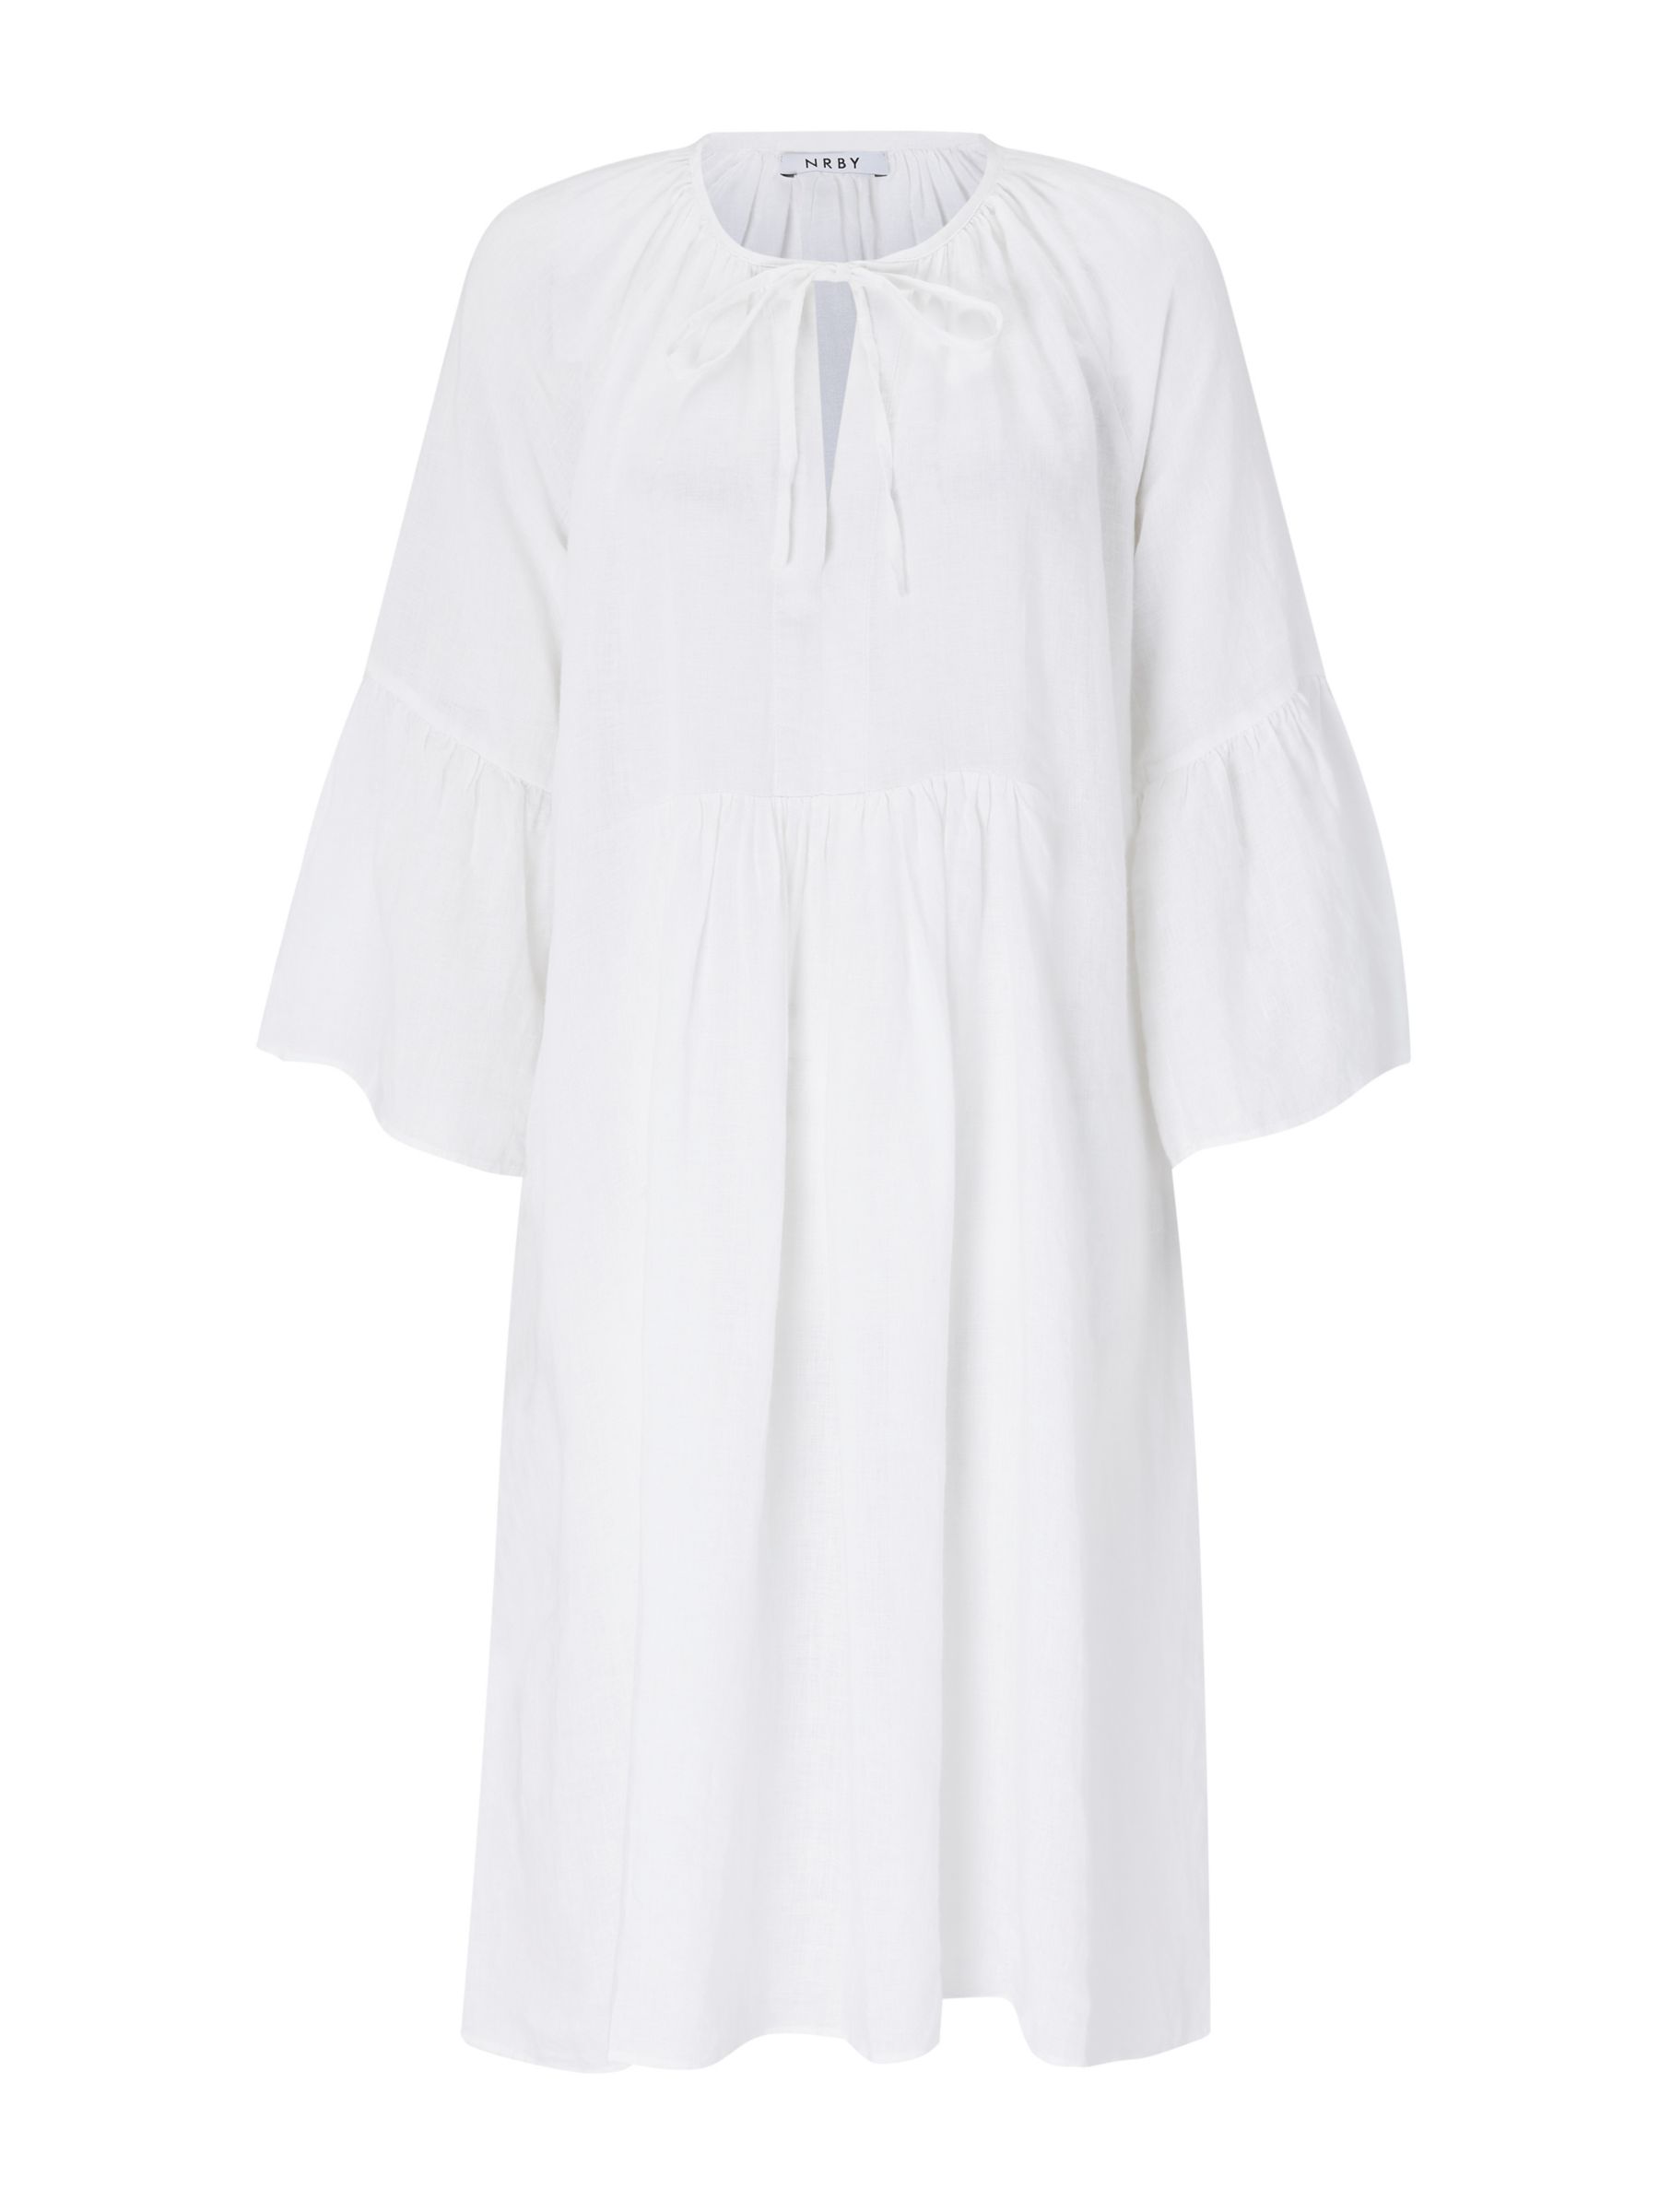 NRBY Elizabeth Linen Tunic Dress, White at John Lewis & Partners